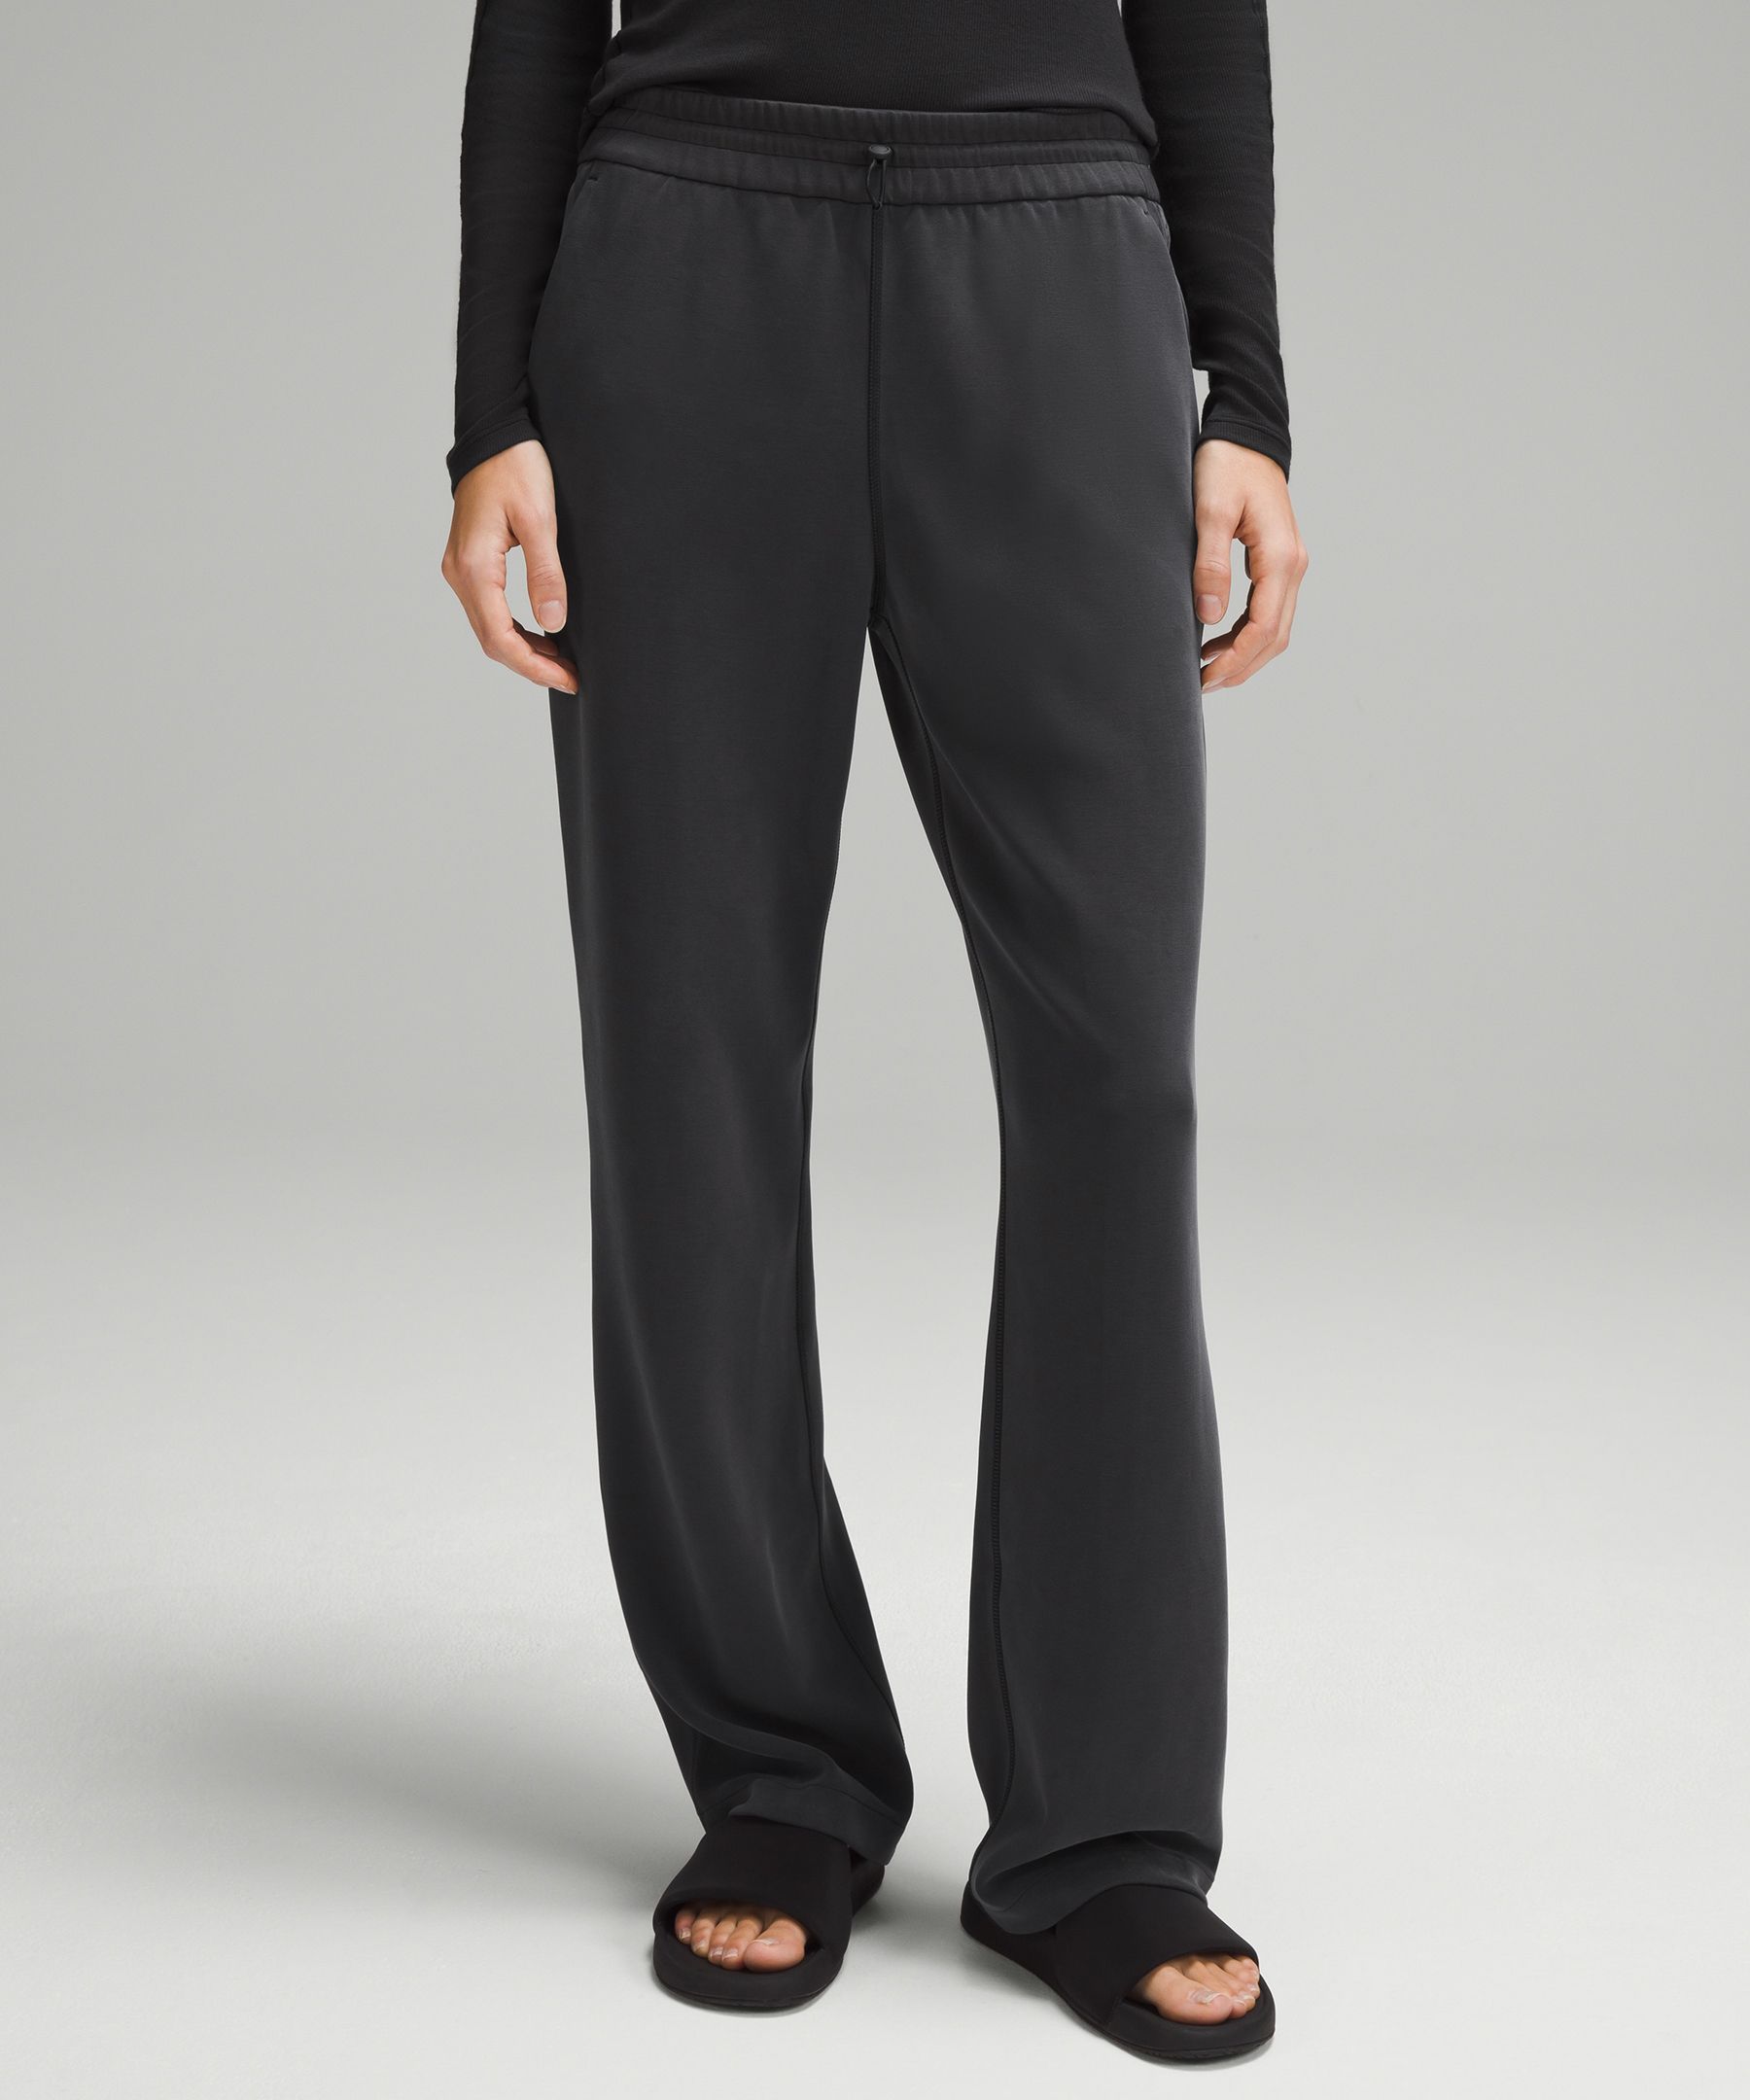 Lululemon Athletica Polka Dots Black Active Pants Size 20 (Plus) - 44% off